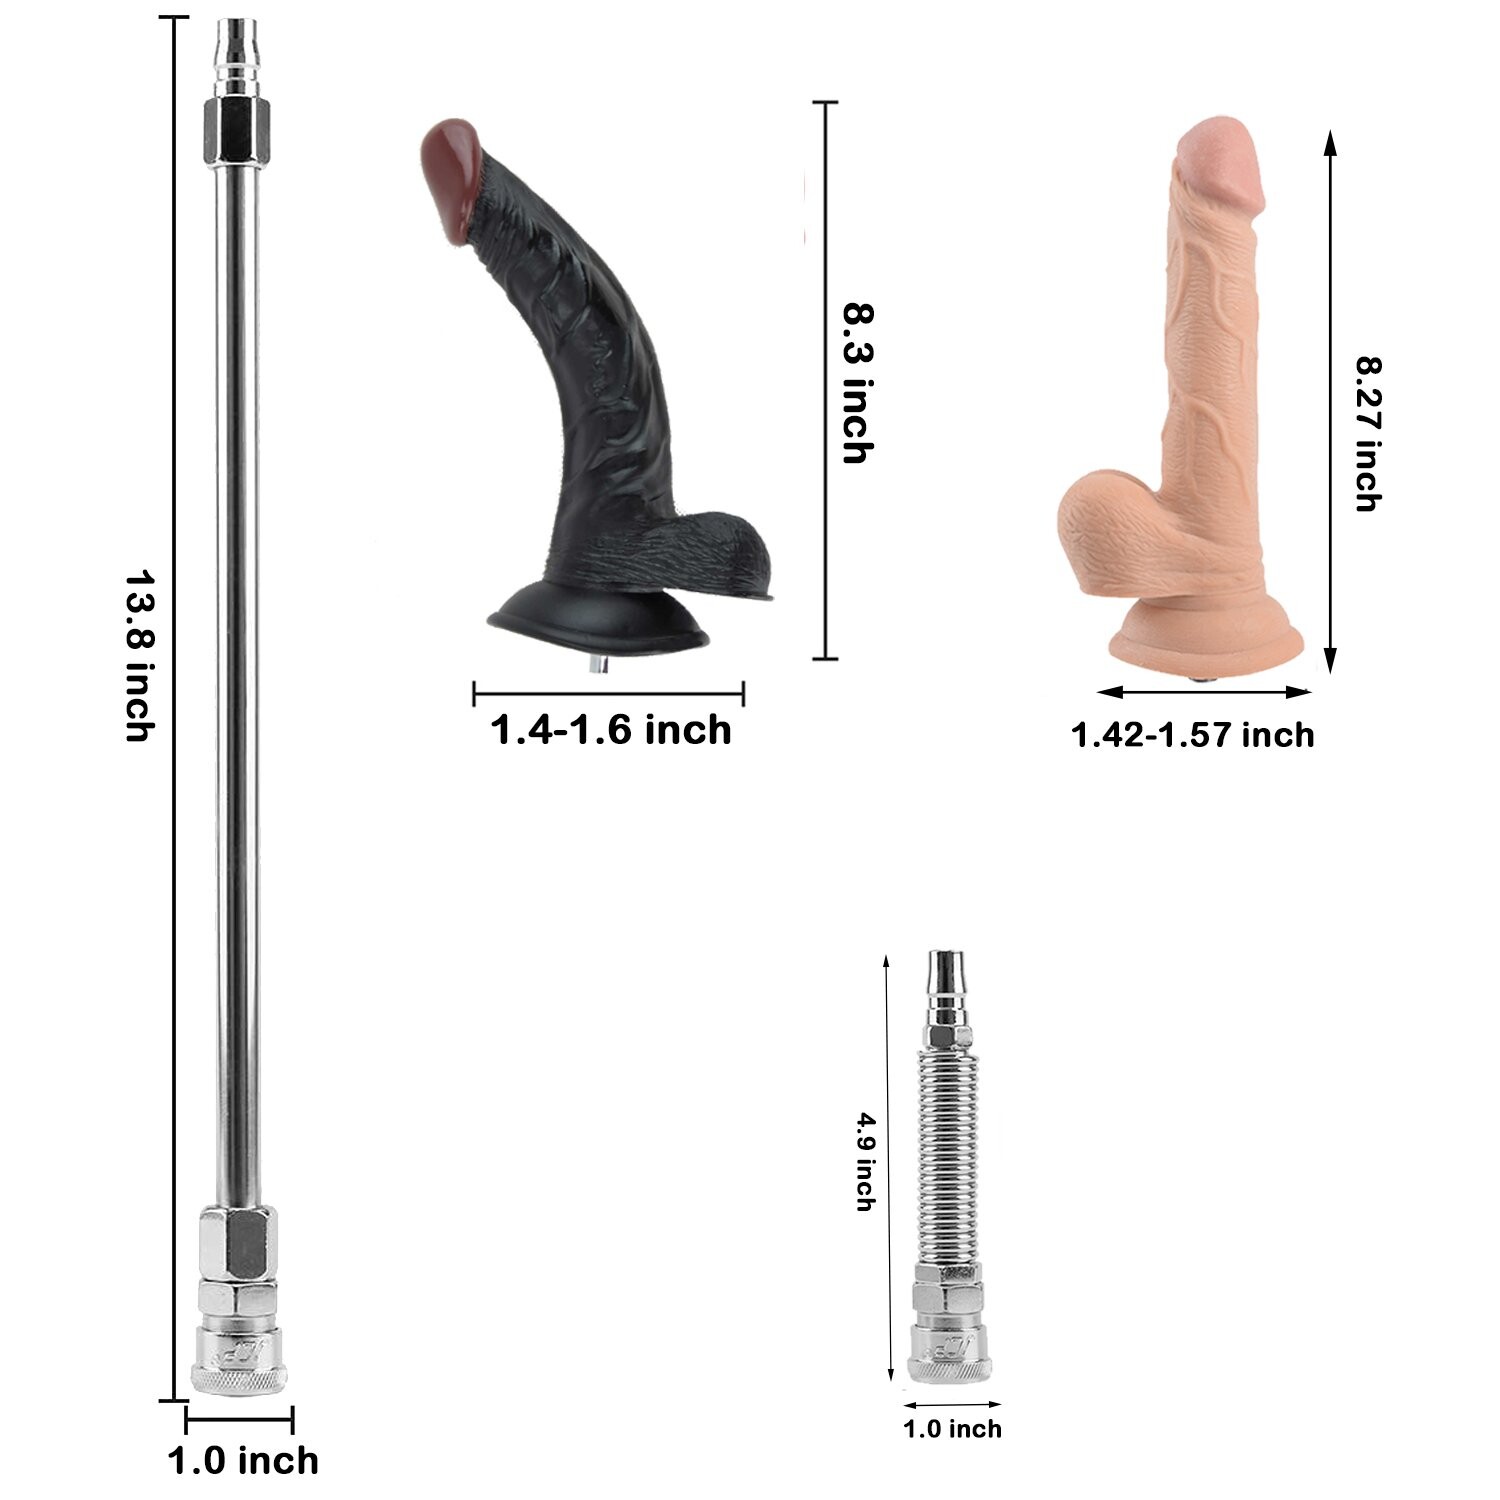 Remote Premium Sex Machine Women with APP Controlled 4 Attachments